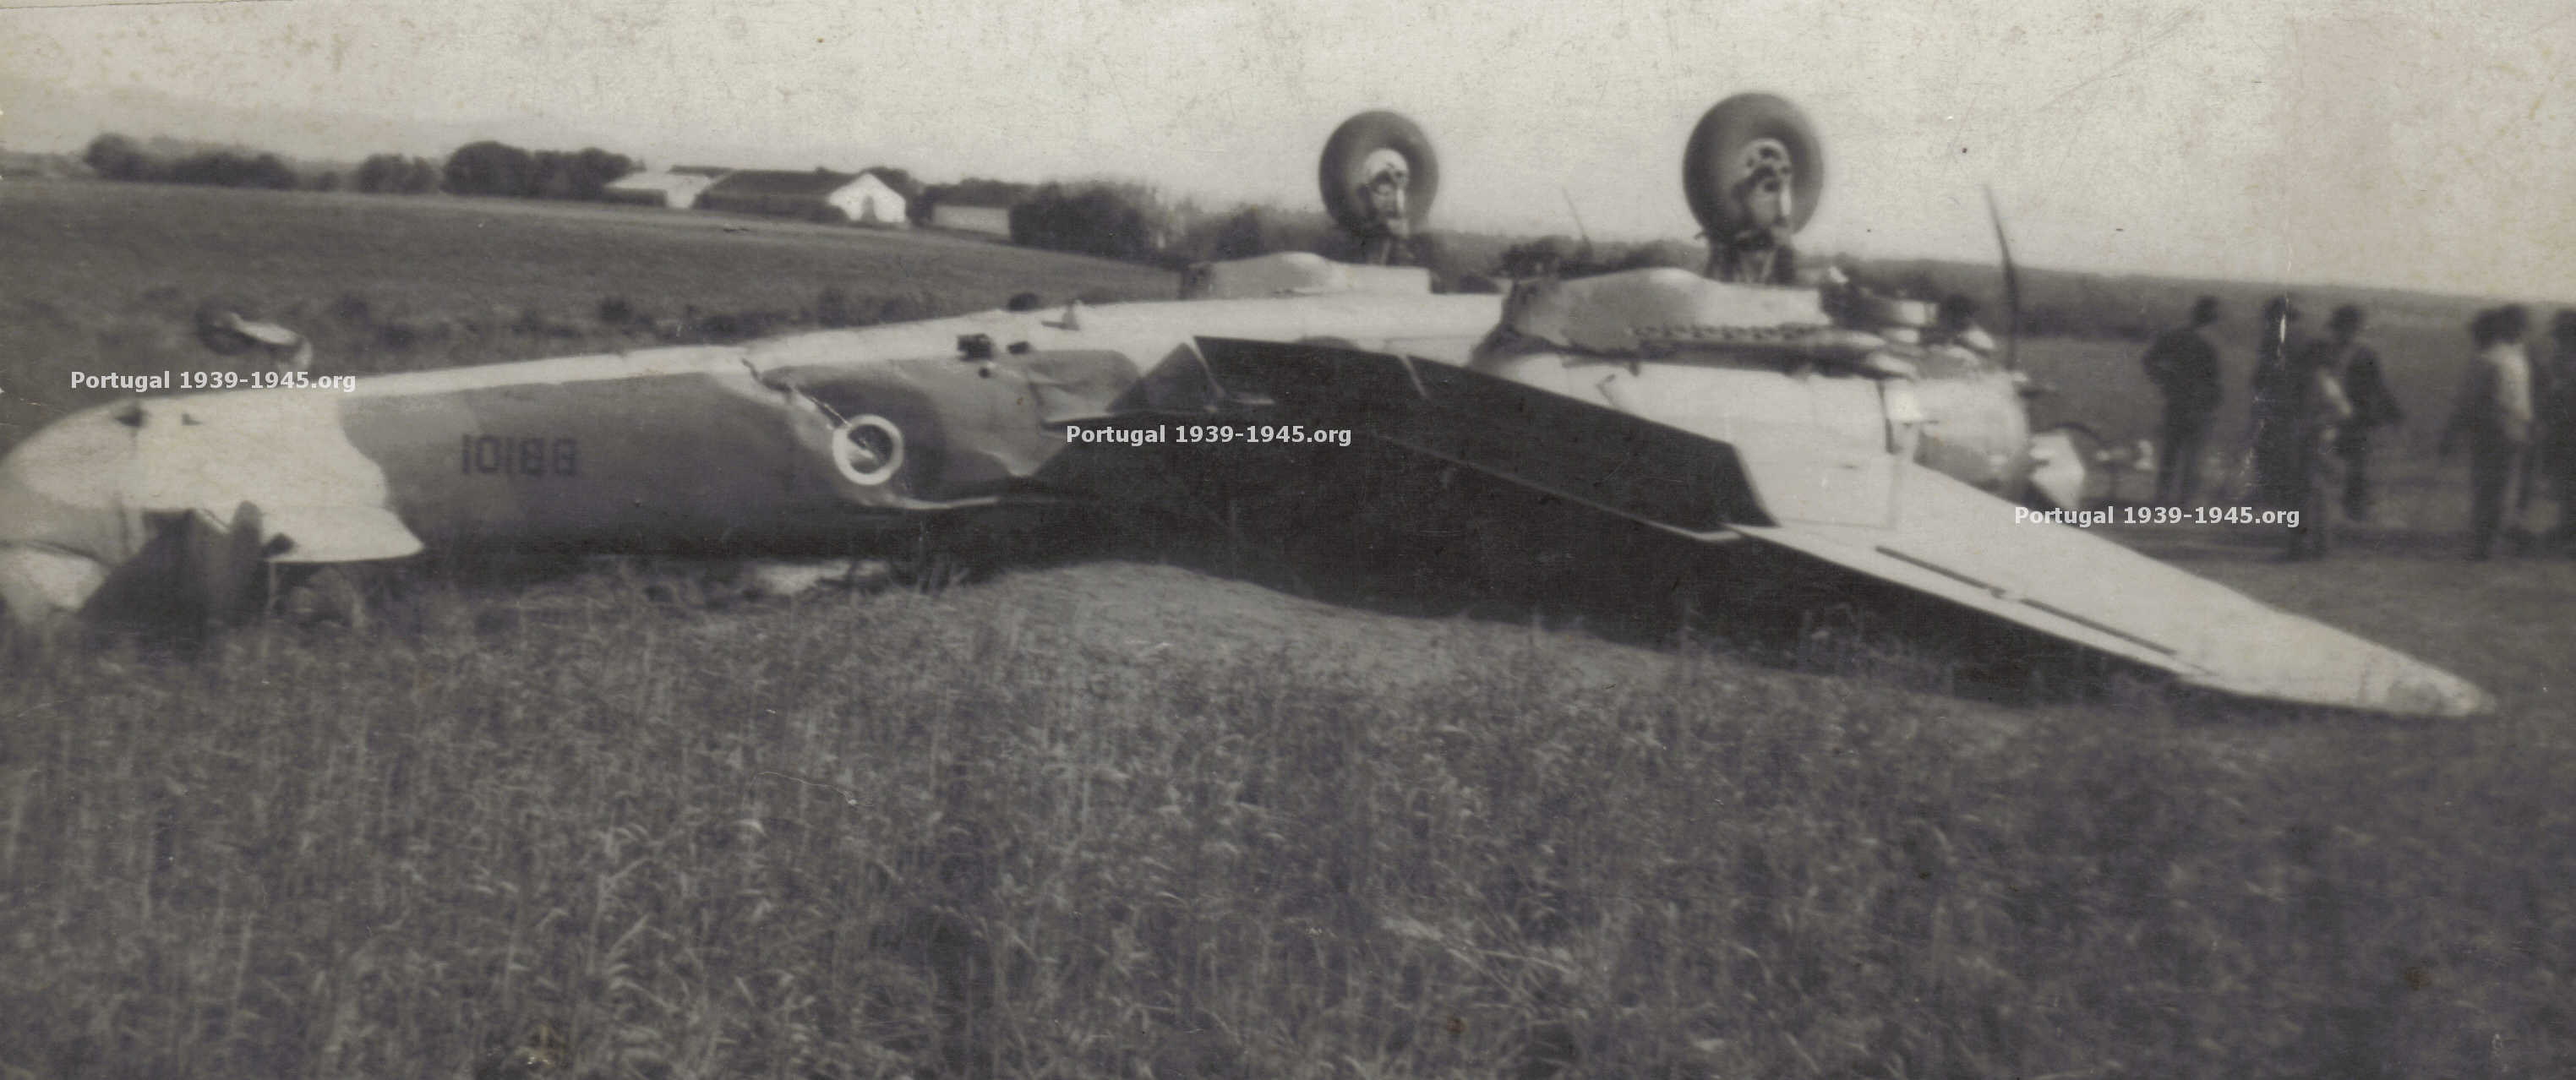 The Bristol Blenheim after the dificult landing in Vila Nova de Milfontes  (Photo: Colecção particular)